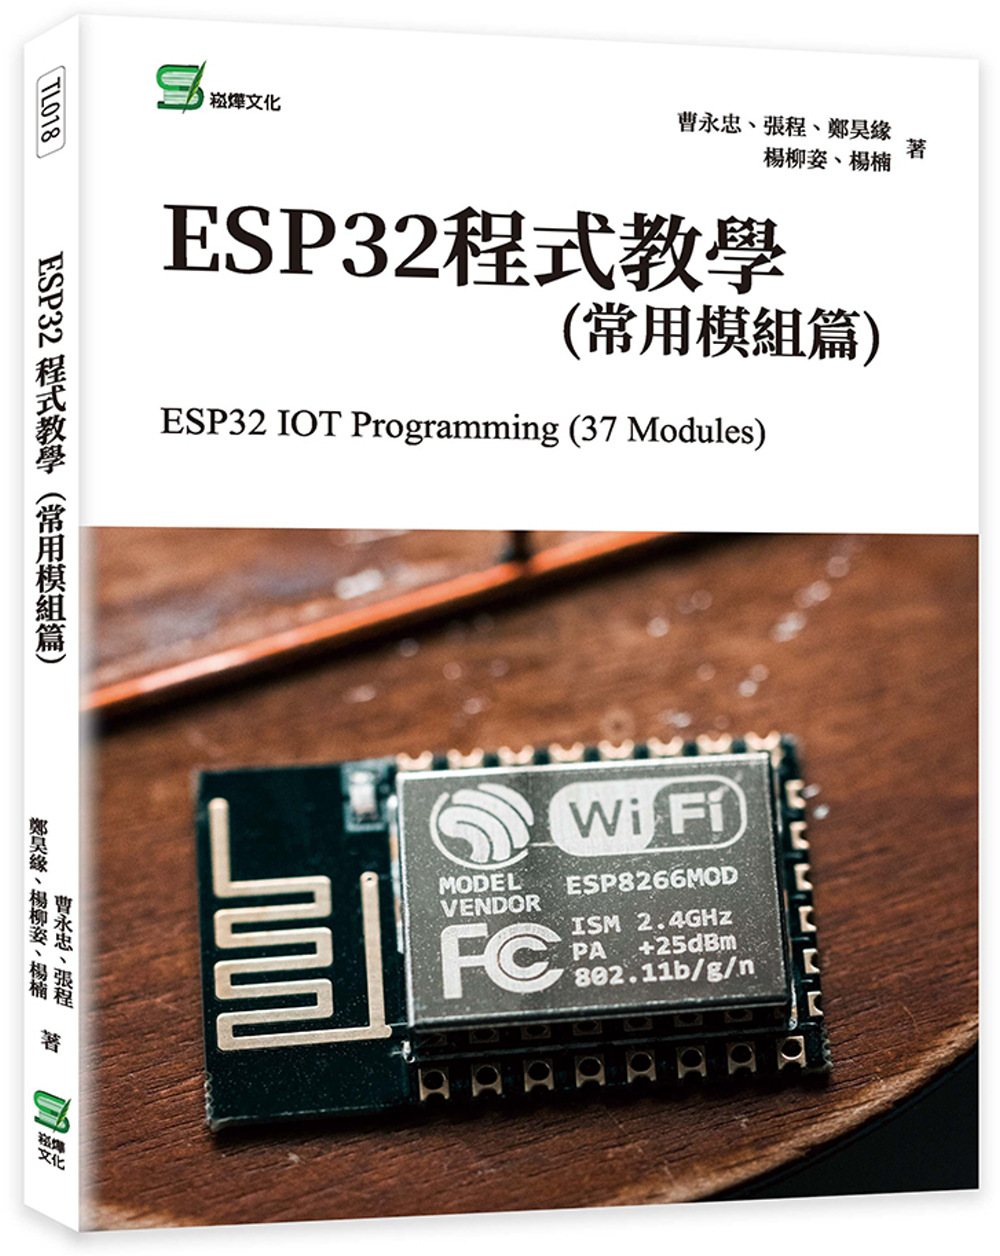 ESP32S程式教學(常用模組篇)